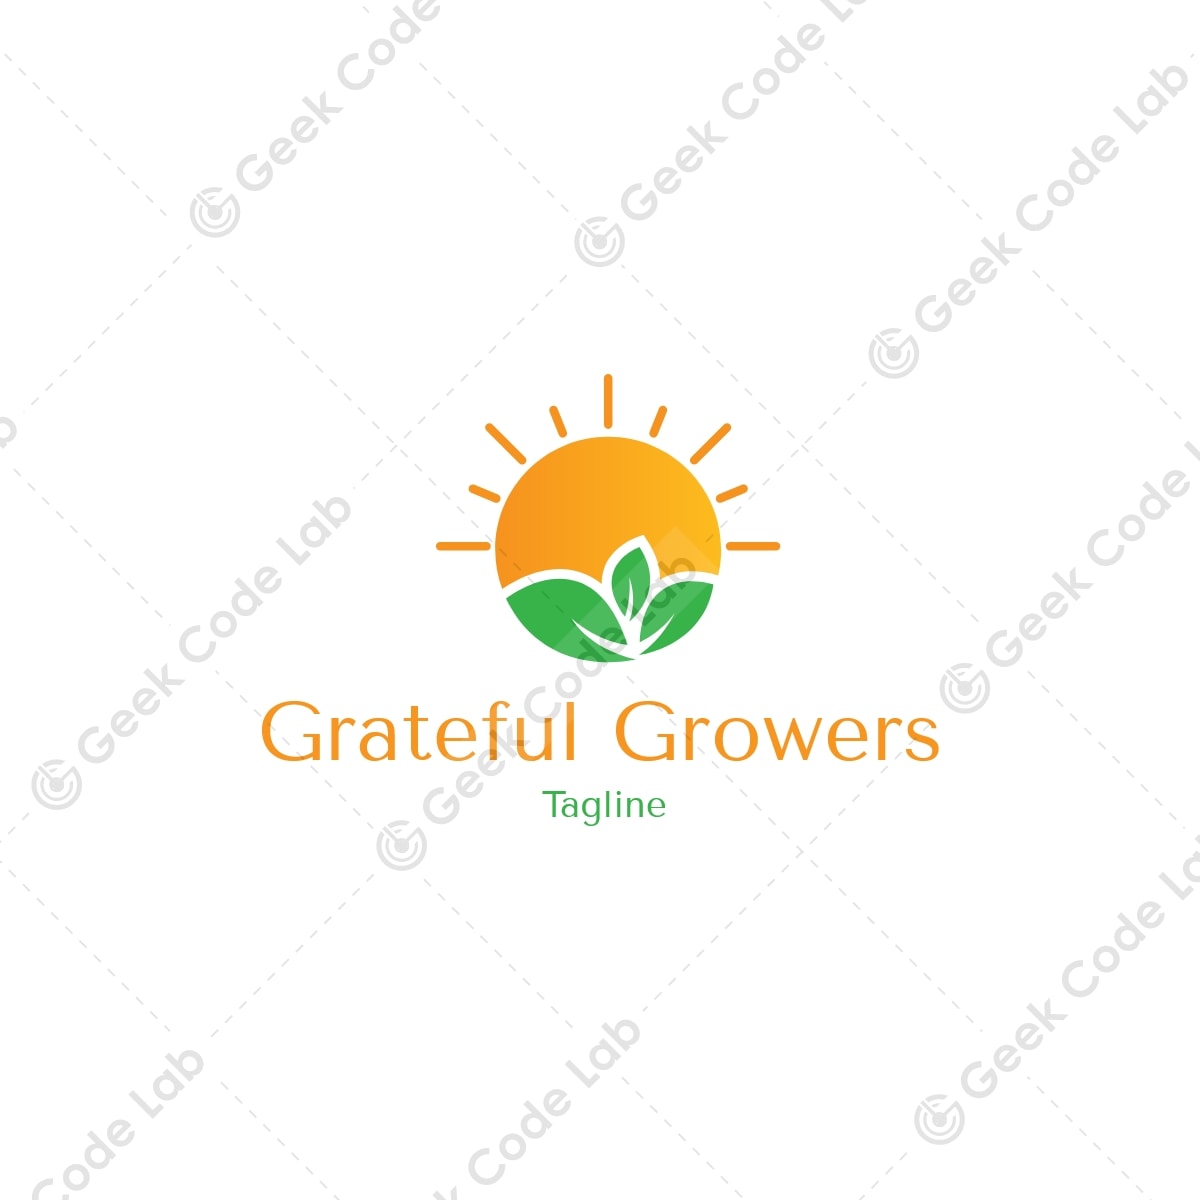 Grateful Growers